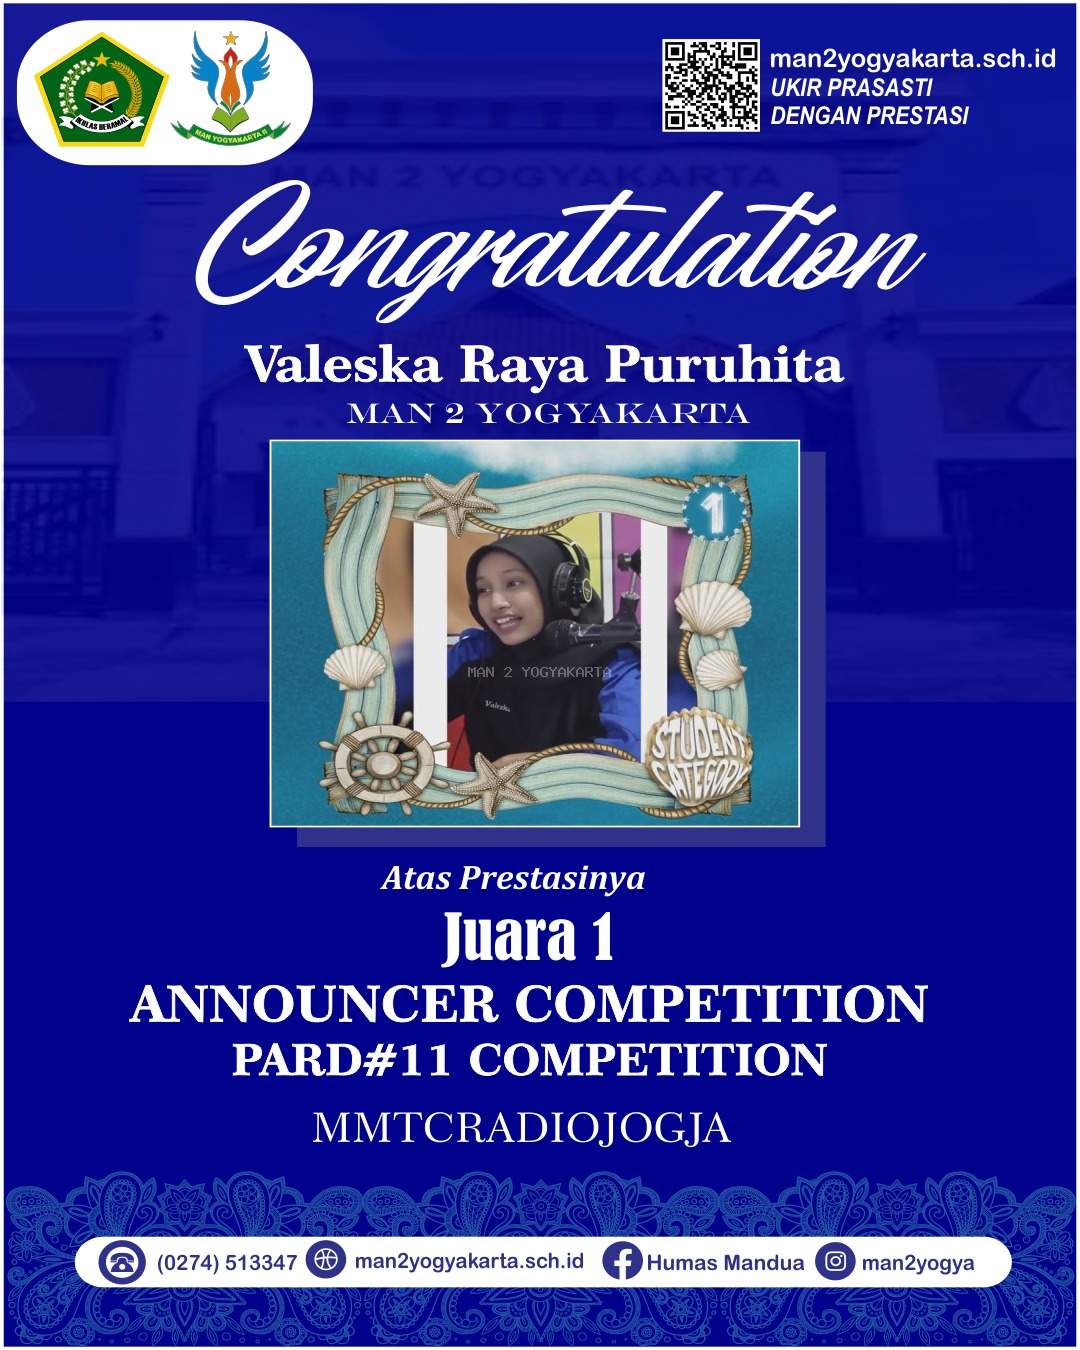 Siswa MAN 2 Yogyakarta Borong Kejuaraan Announcer Competition Part #11 Competition MMTC Radio Jogja